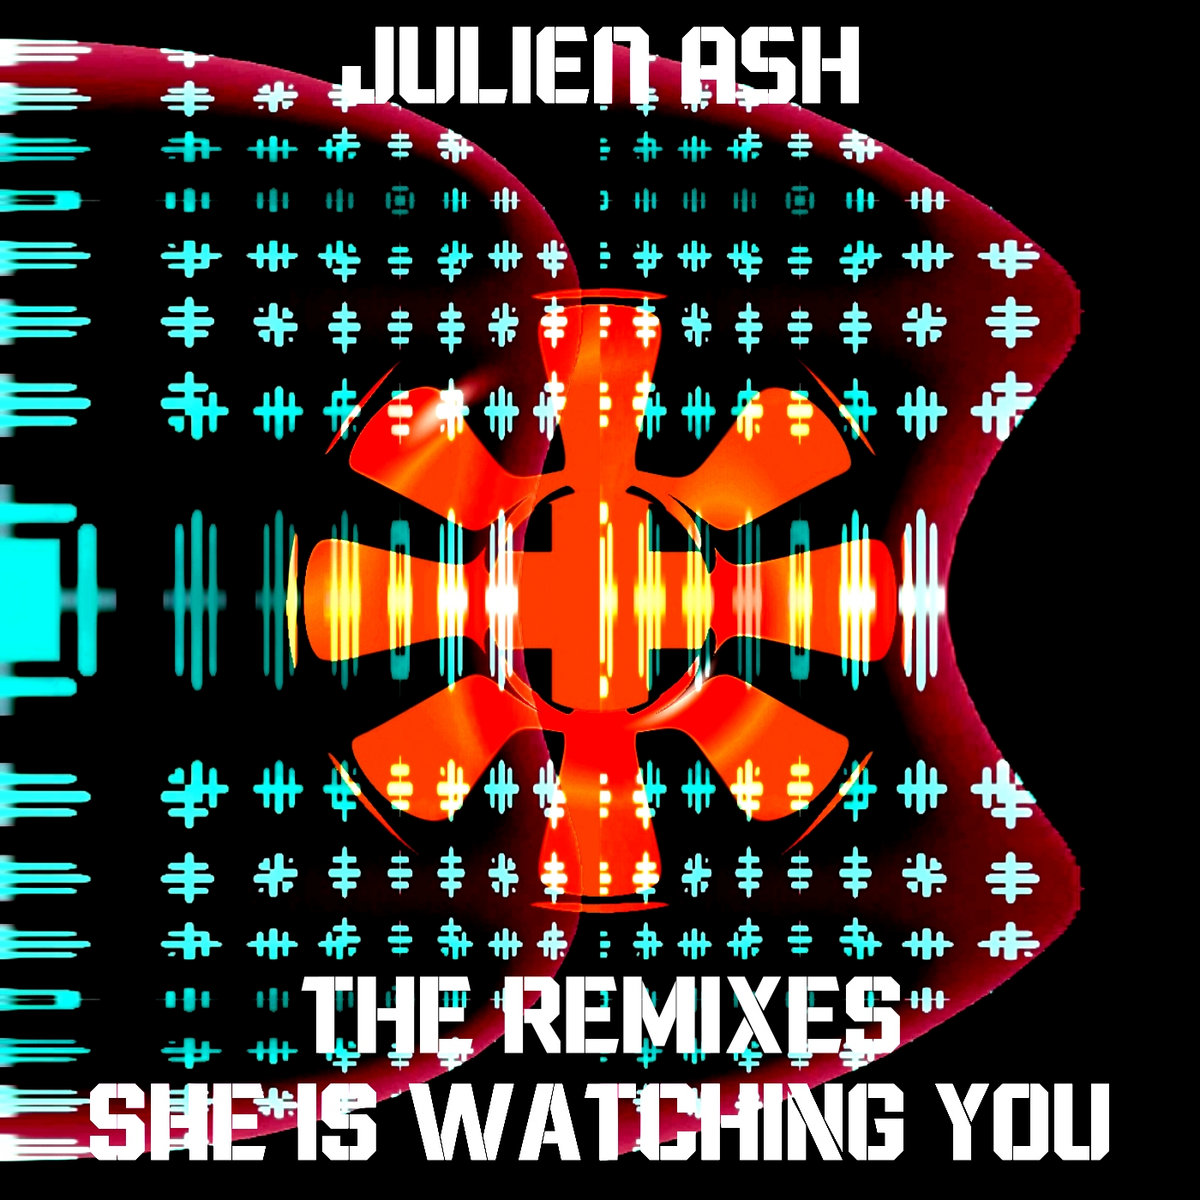 She is watching you - the remixes